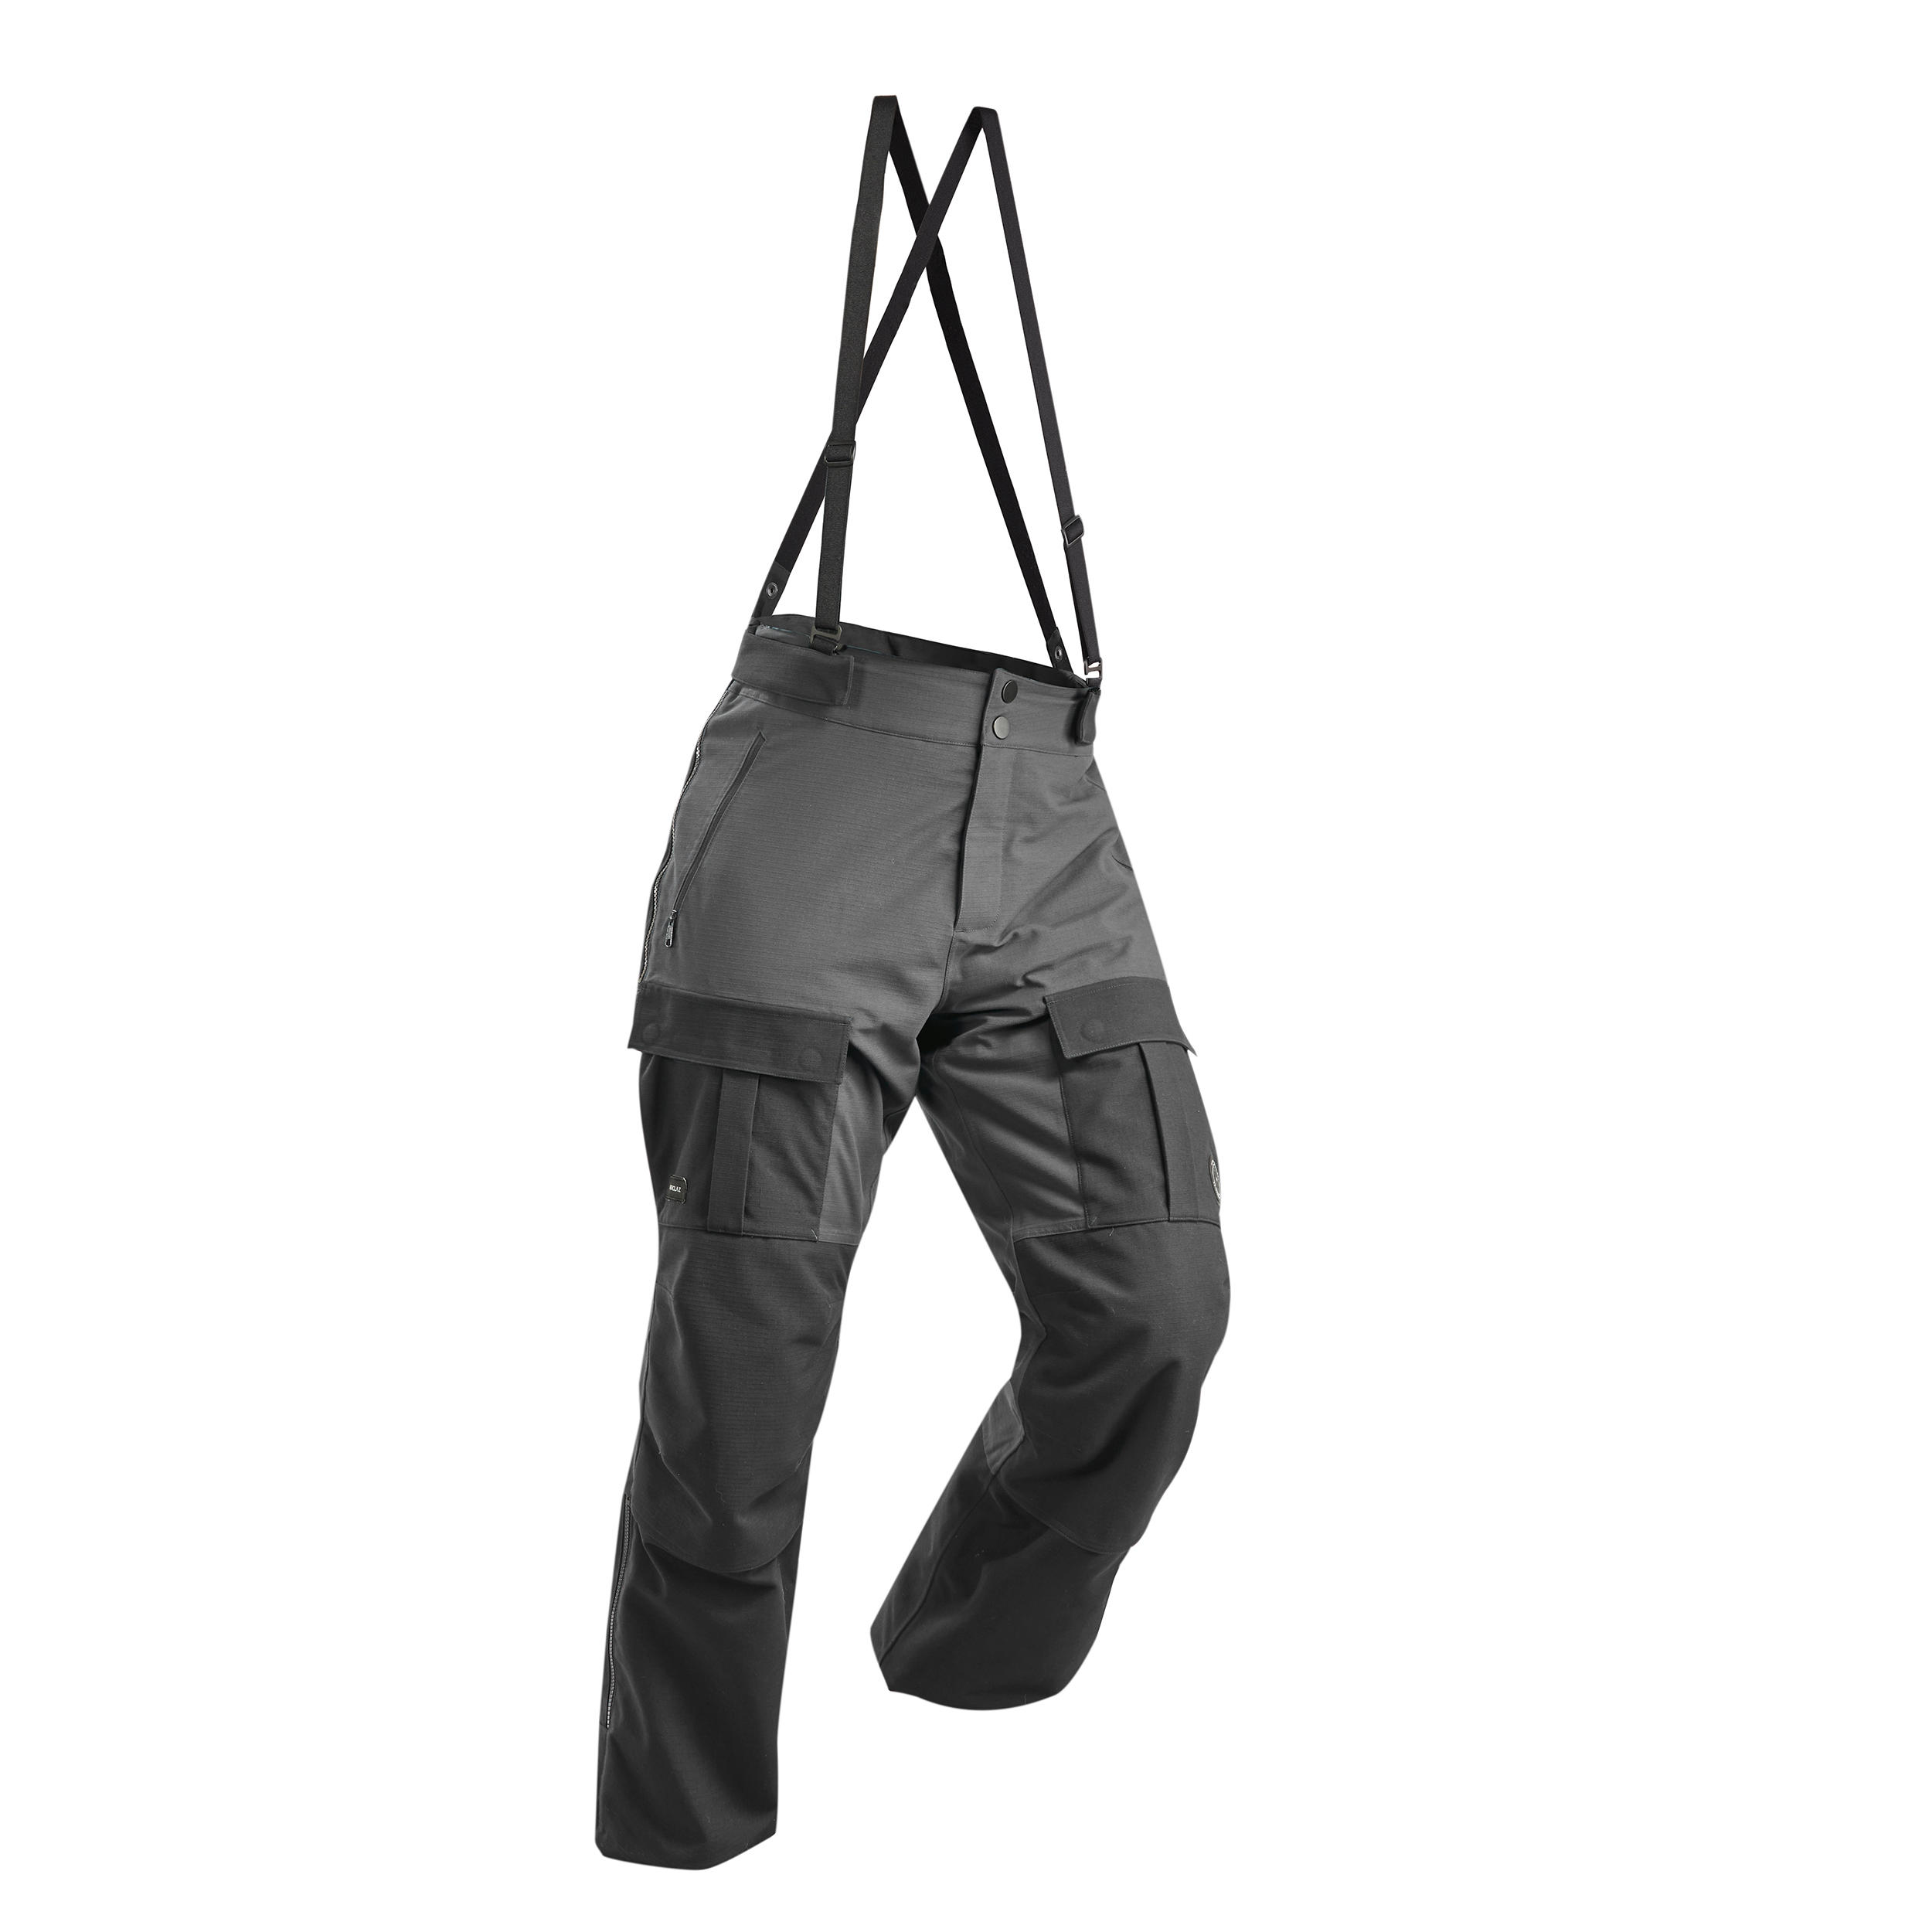 Pantalon Călduros Impermeabil Trekking ARCTIC 900 Negru Adulți 900